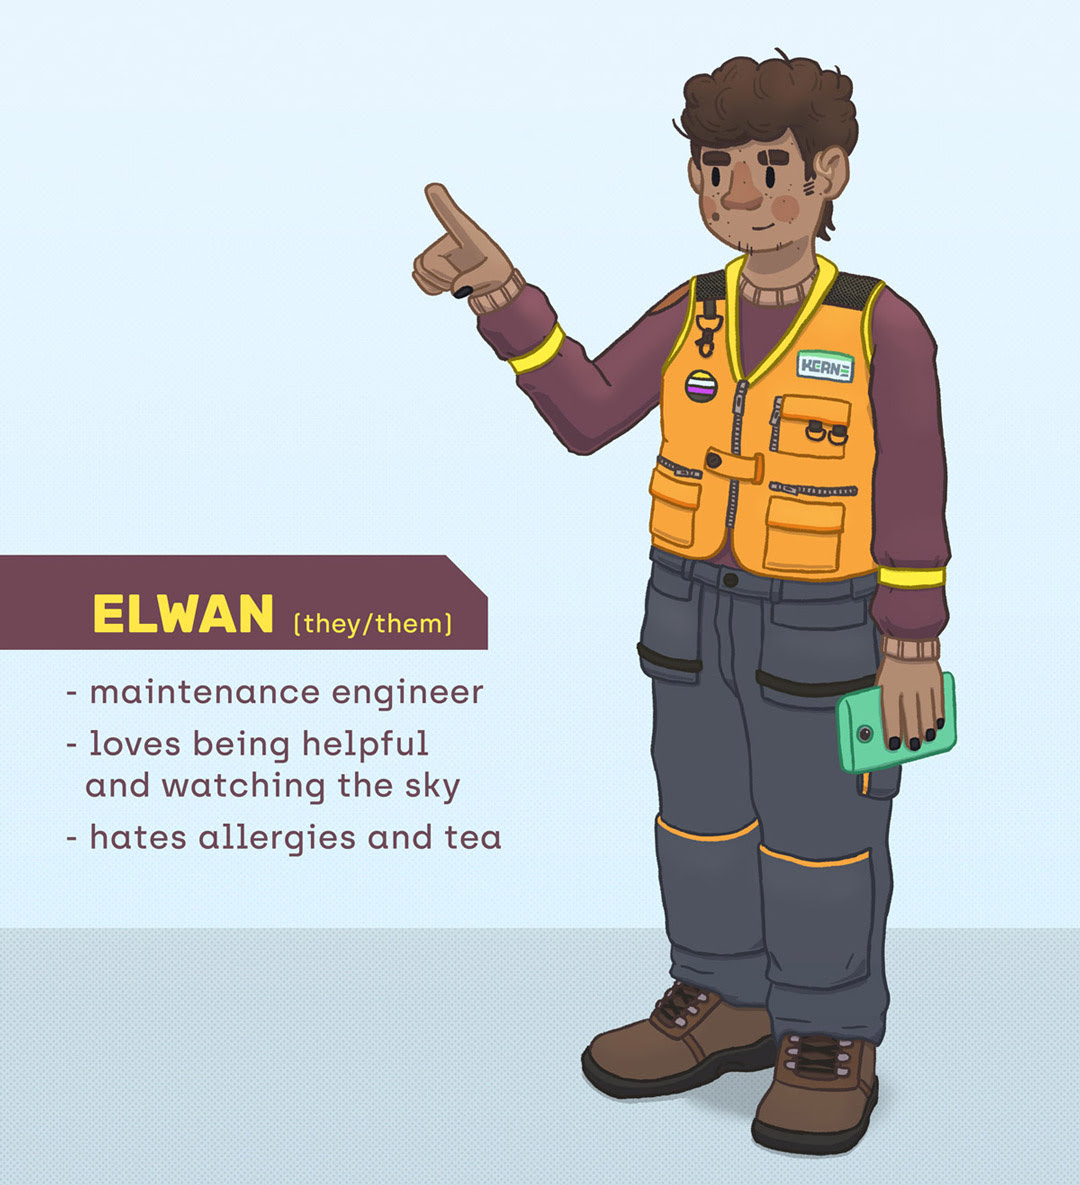 Elwan, the main character, in a work uniform.